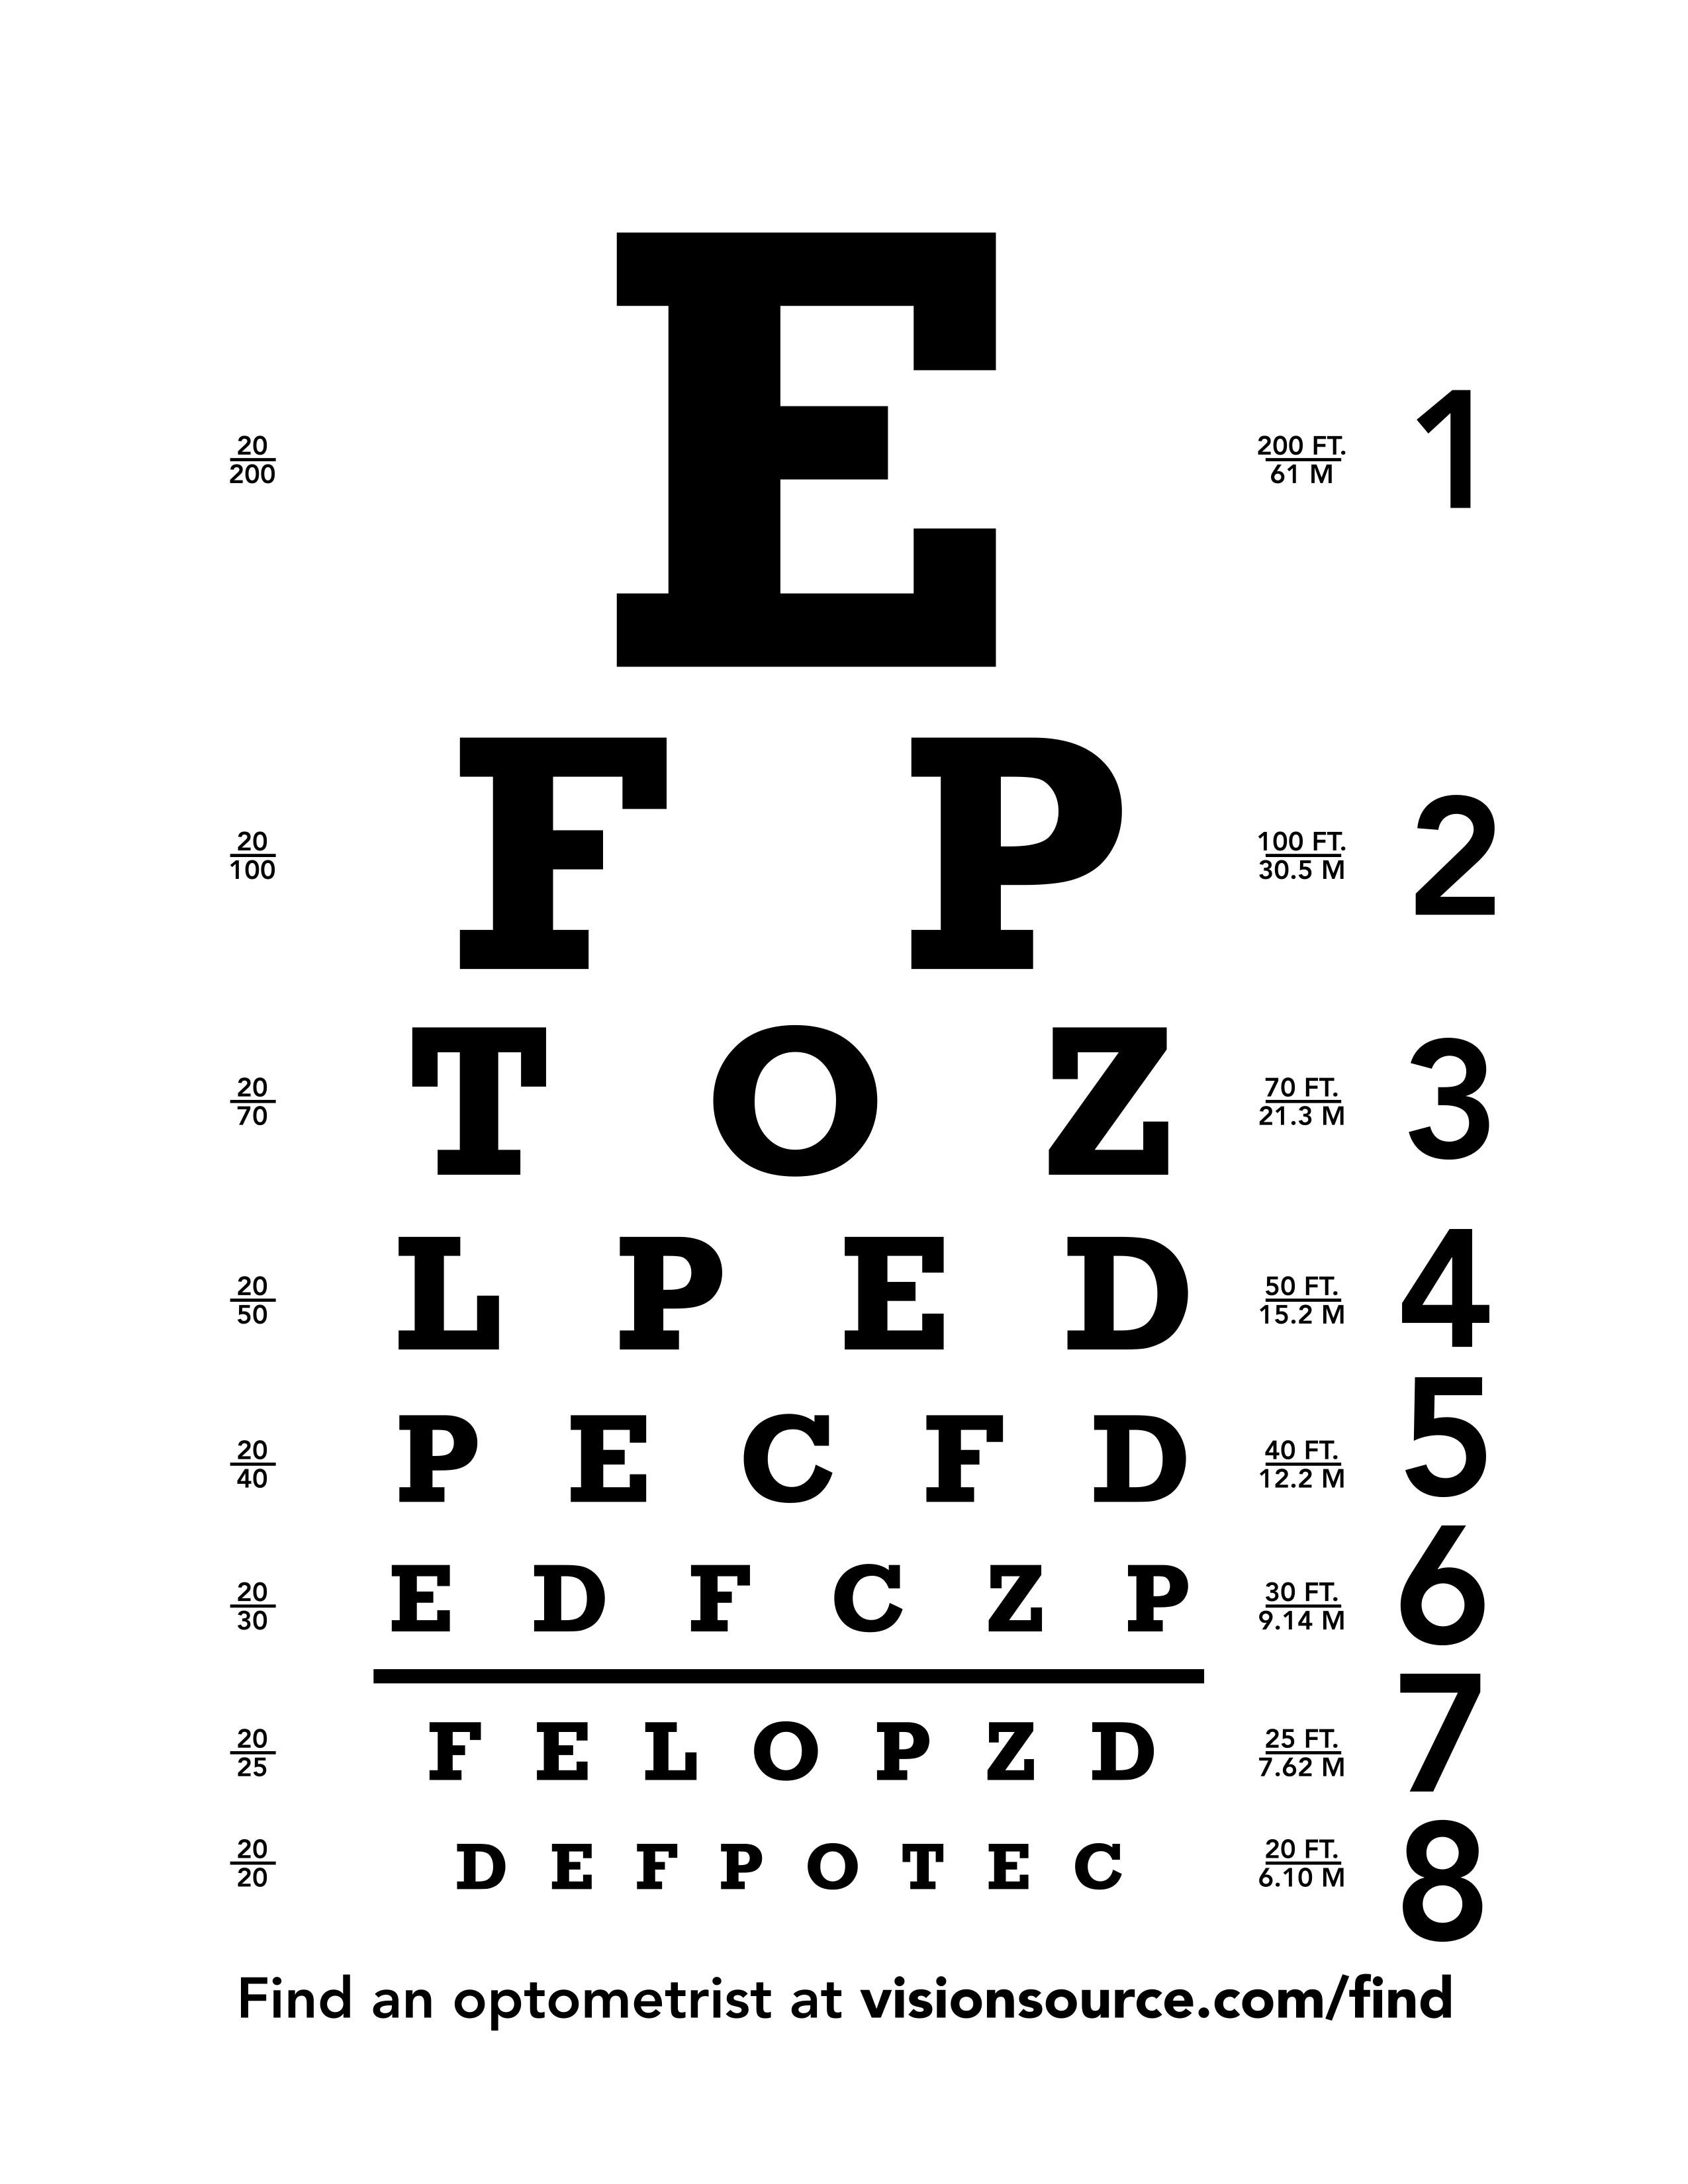 eye-chart-snellen-eye-chart-wall-chart-eye-charts-for-eye-exams-sexiz